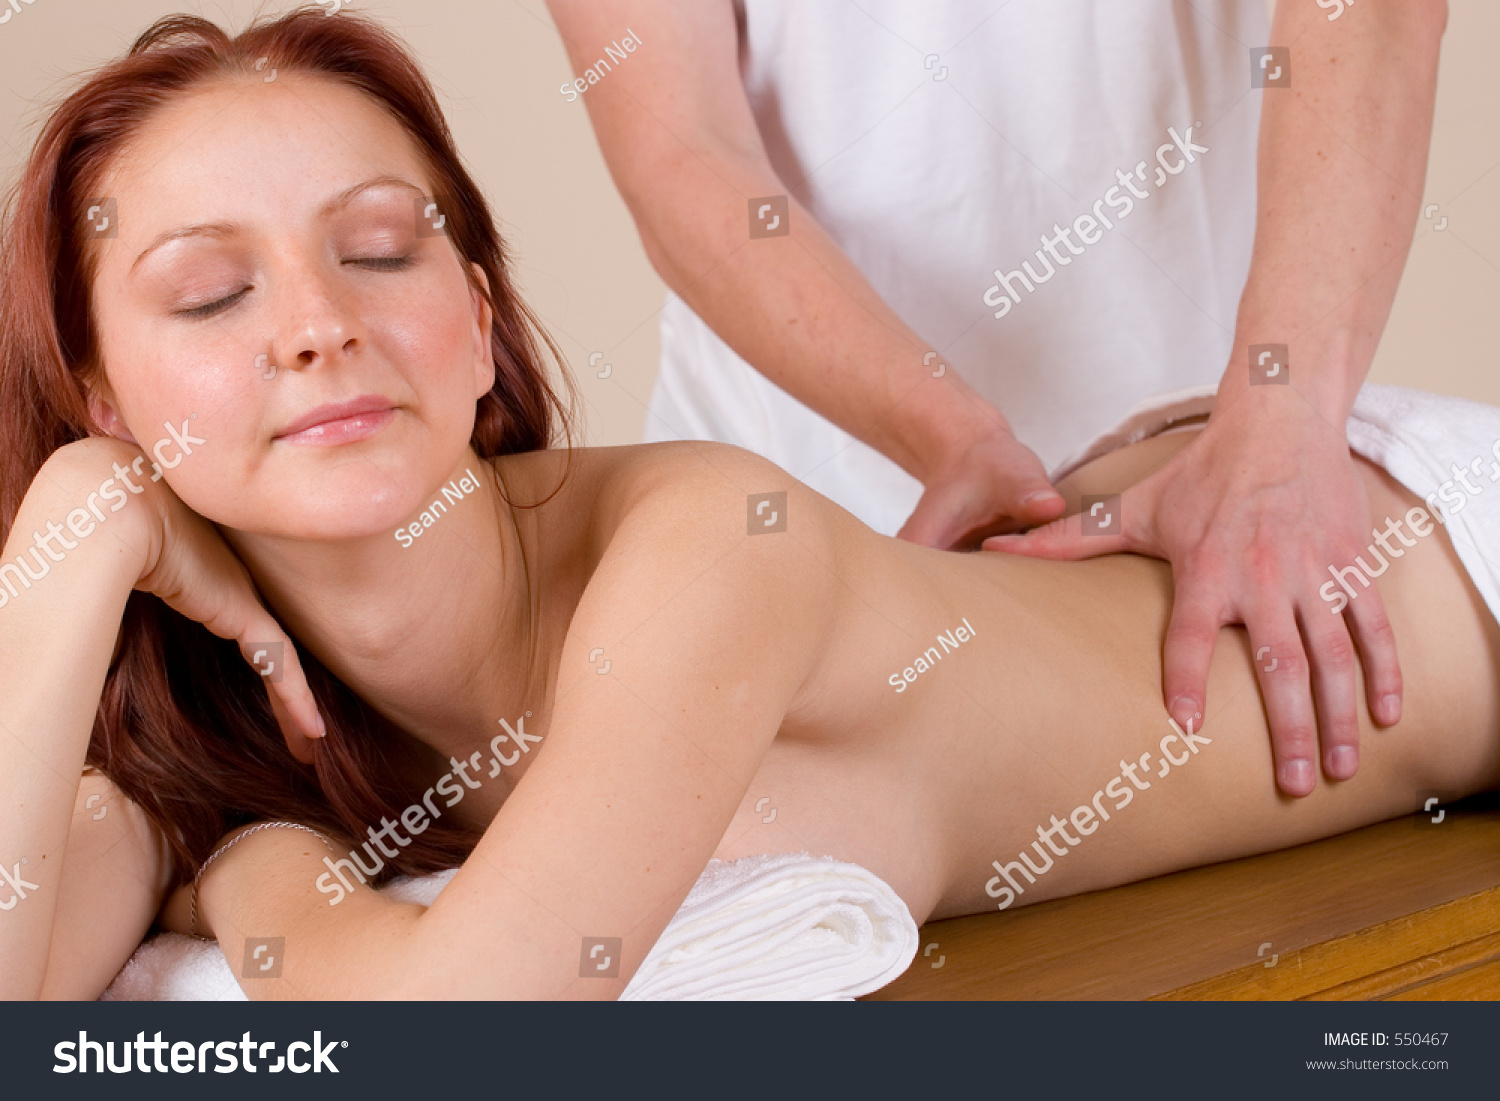 подготовка к массажа анала фото 106